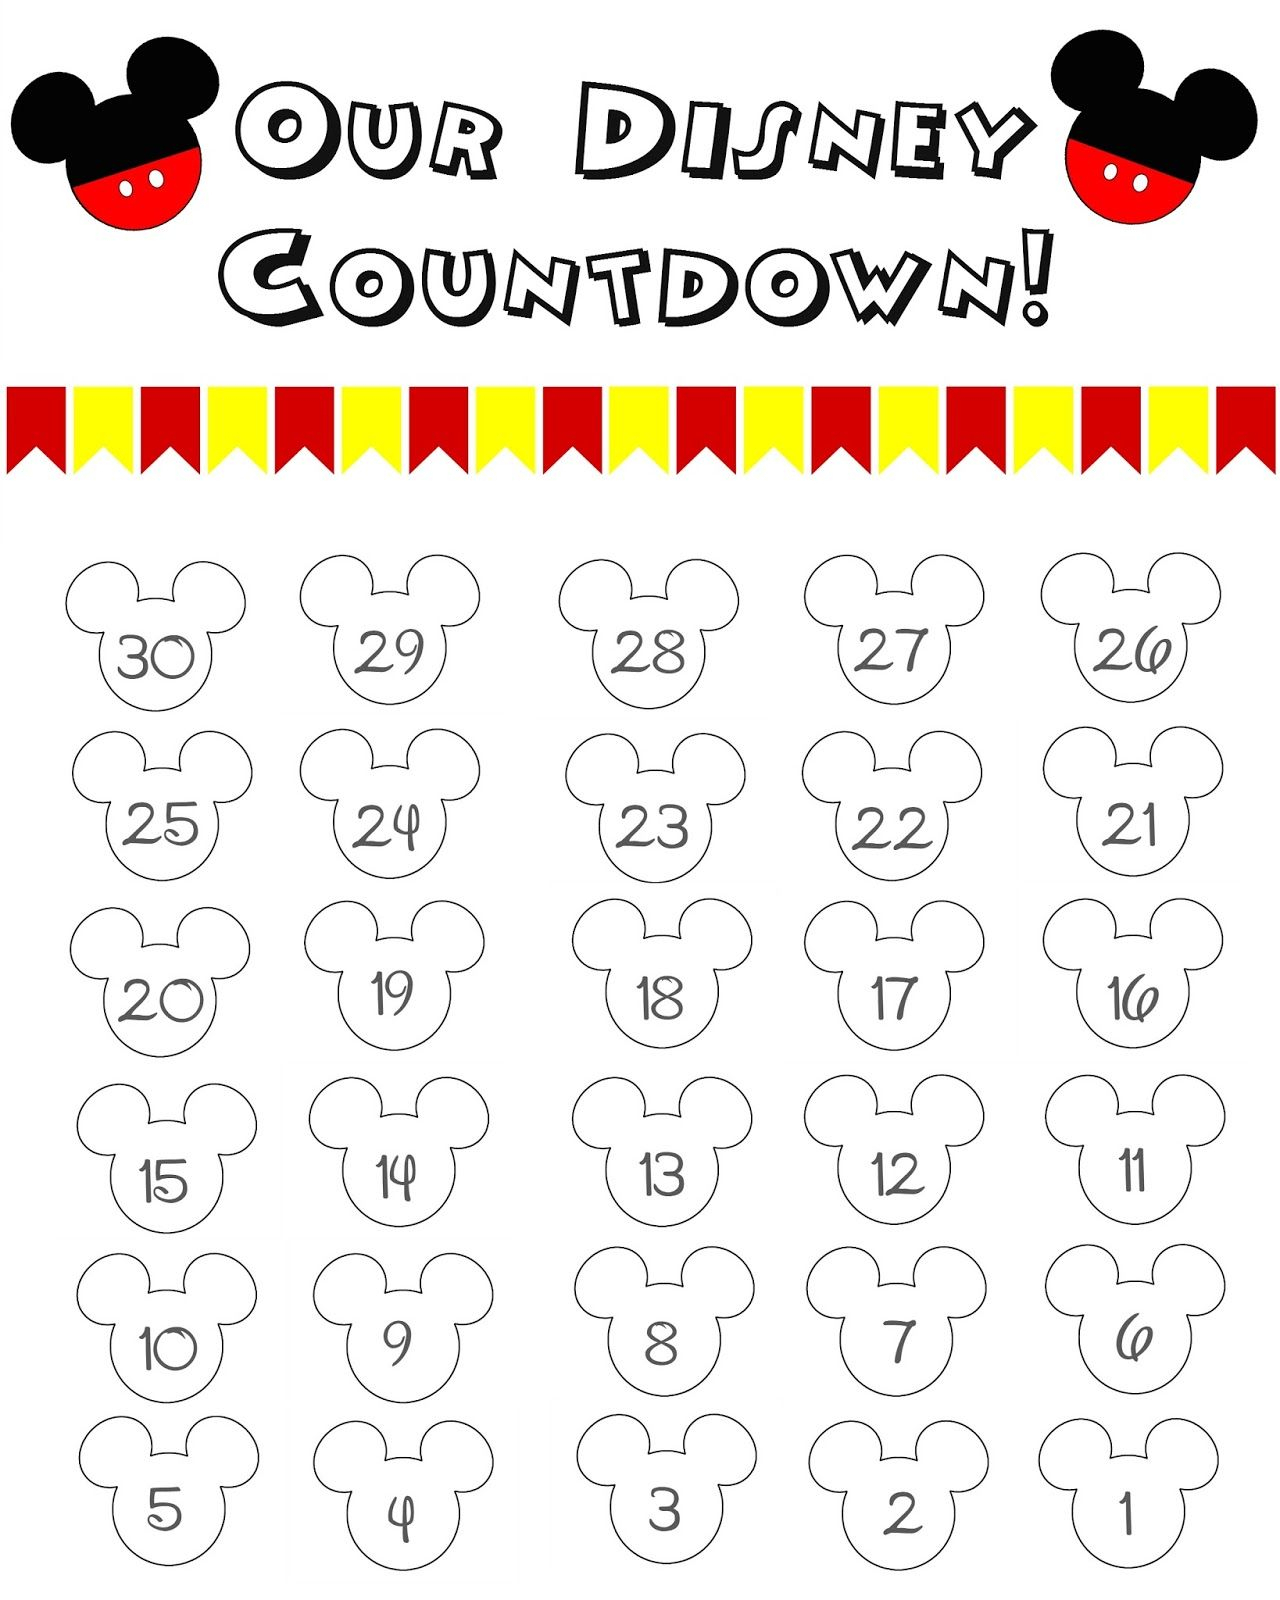 Disney World Countdown Calendar - Free Printable | Disney